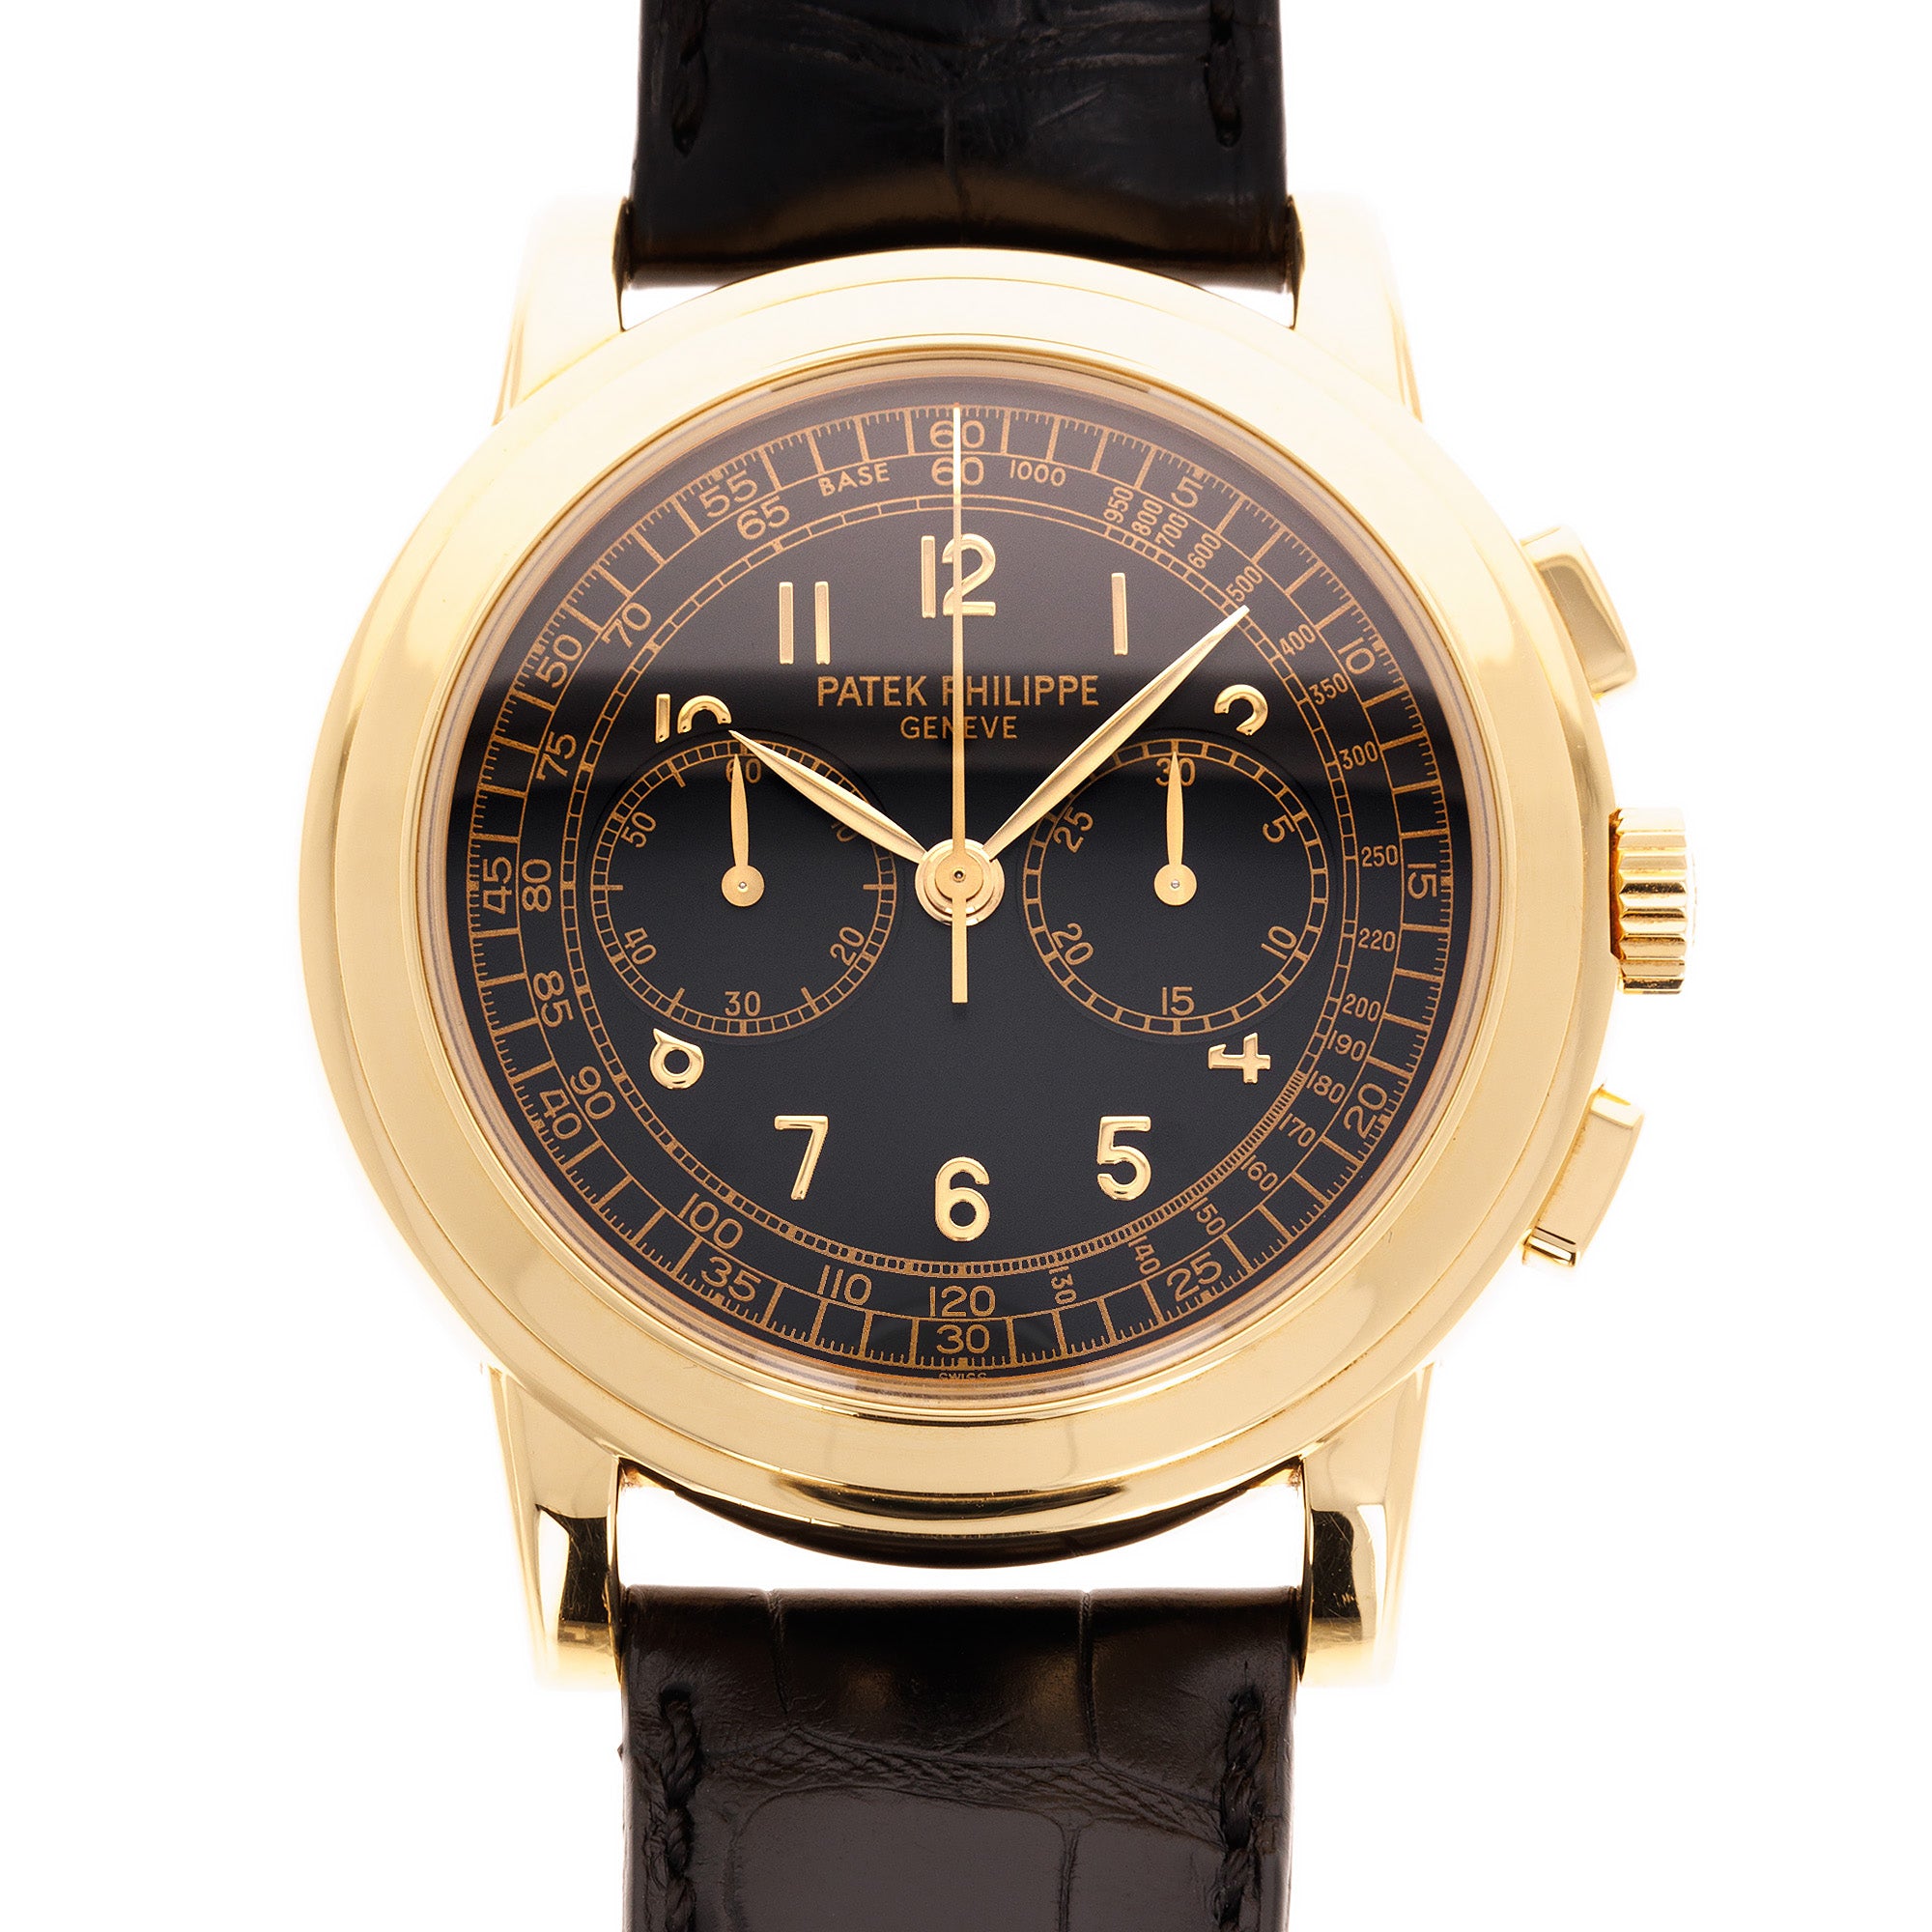 Patek Philippe - Patek Philippe Yellow Gold Chronograph Watch Ref. 5070 - The Keystone Watches